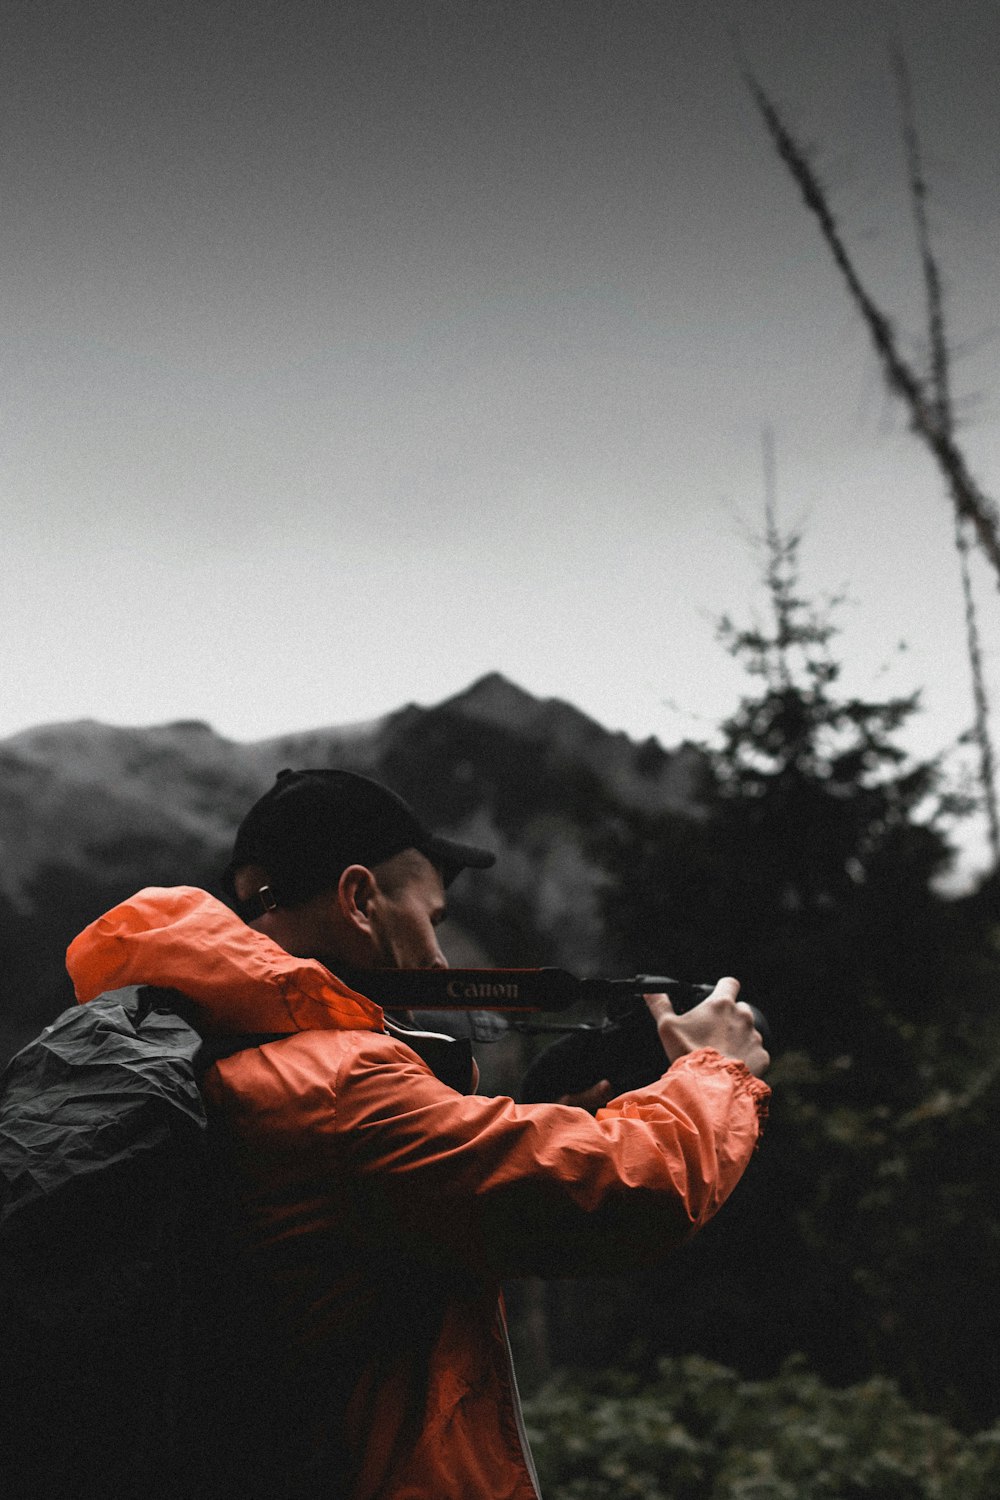 a man in an orange jacket holding a gun